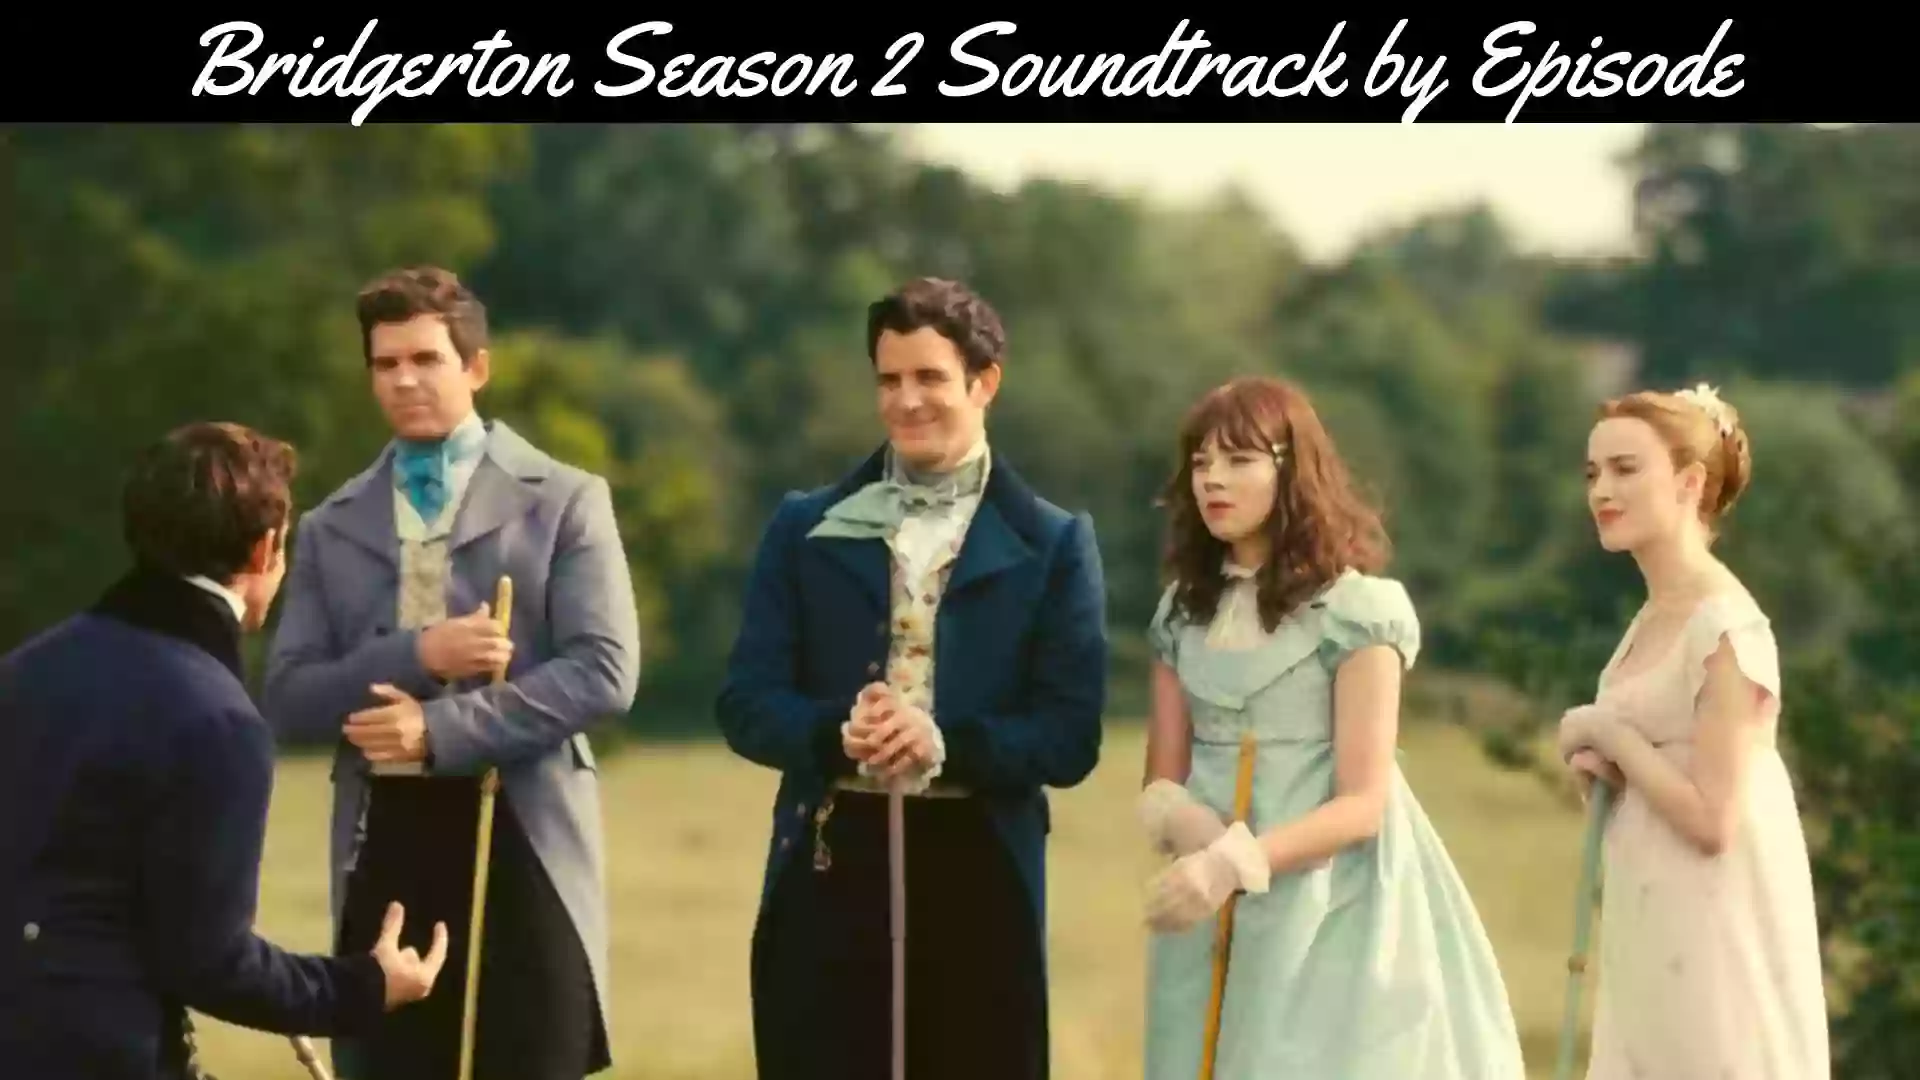 Bridgerton Season 2 Soundtrack by Episode